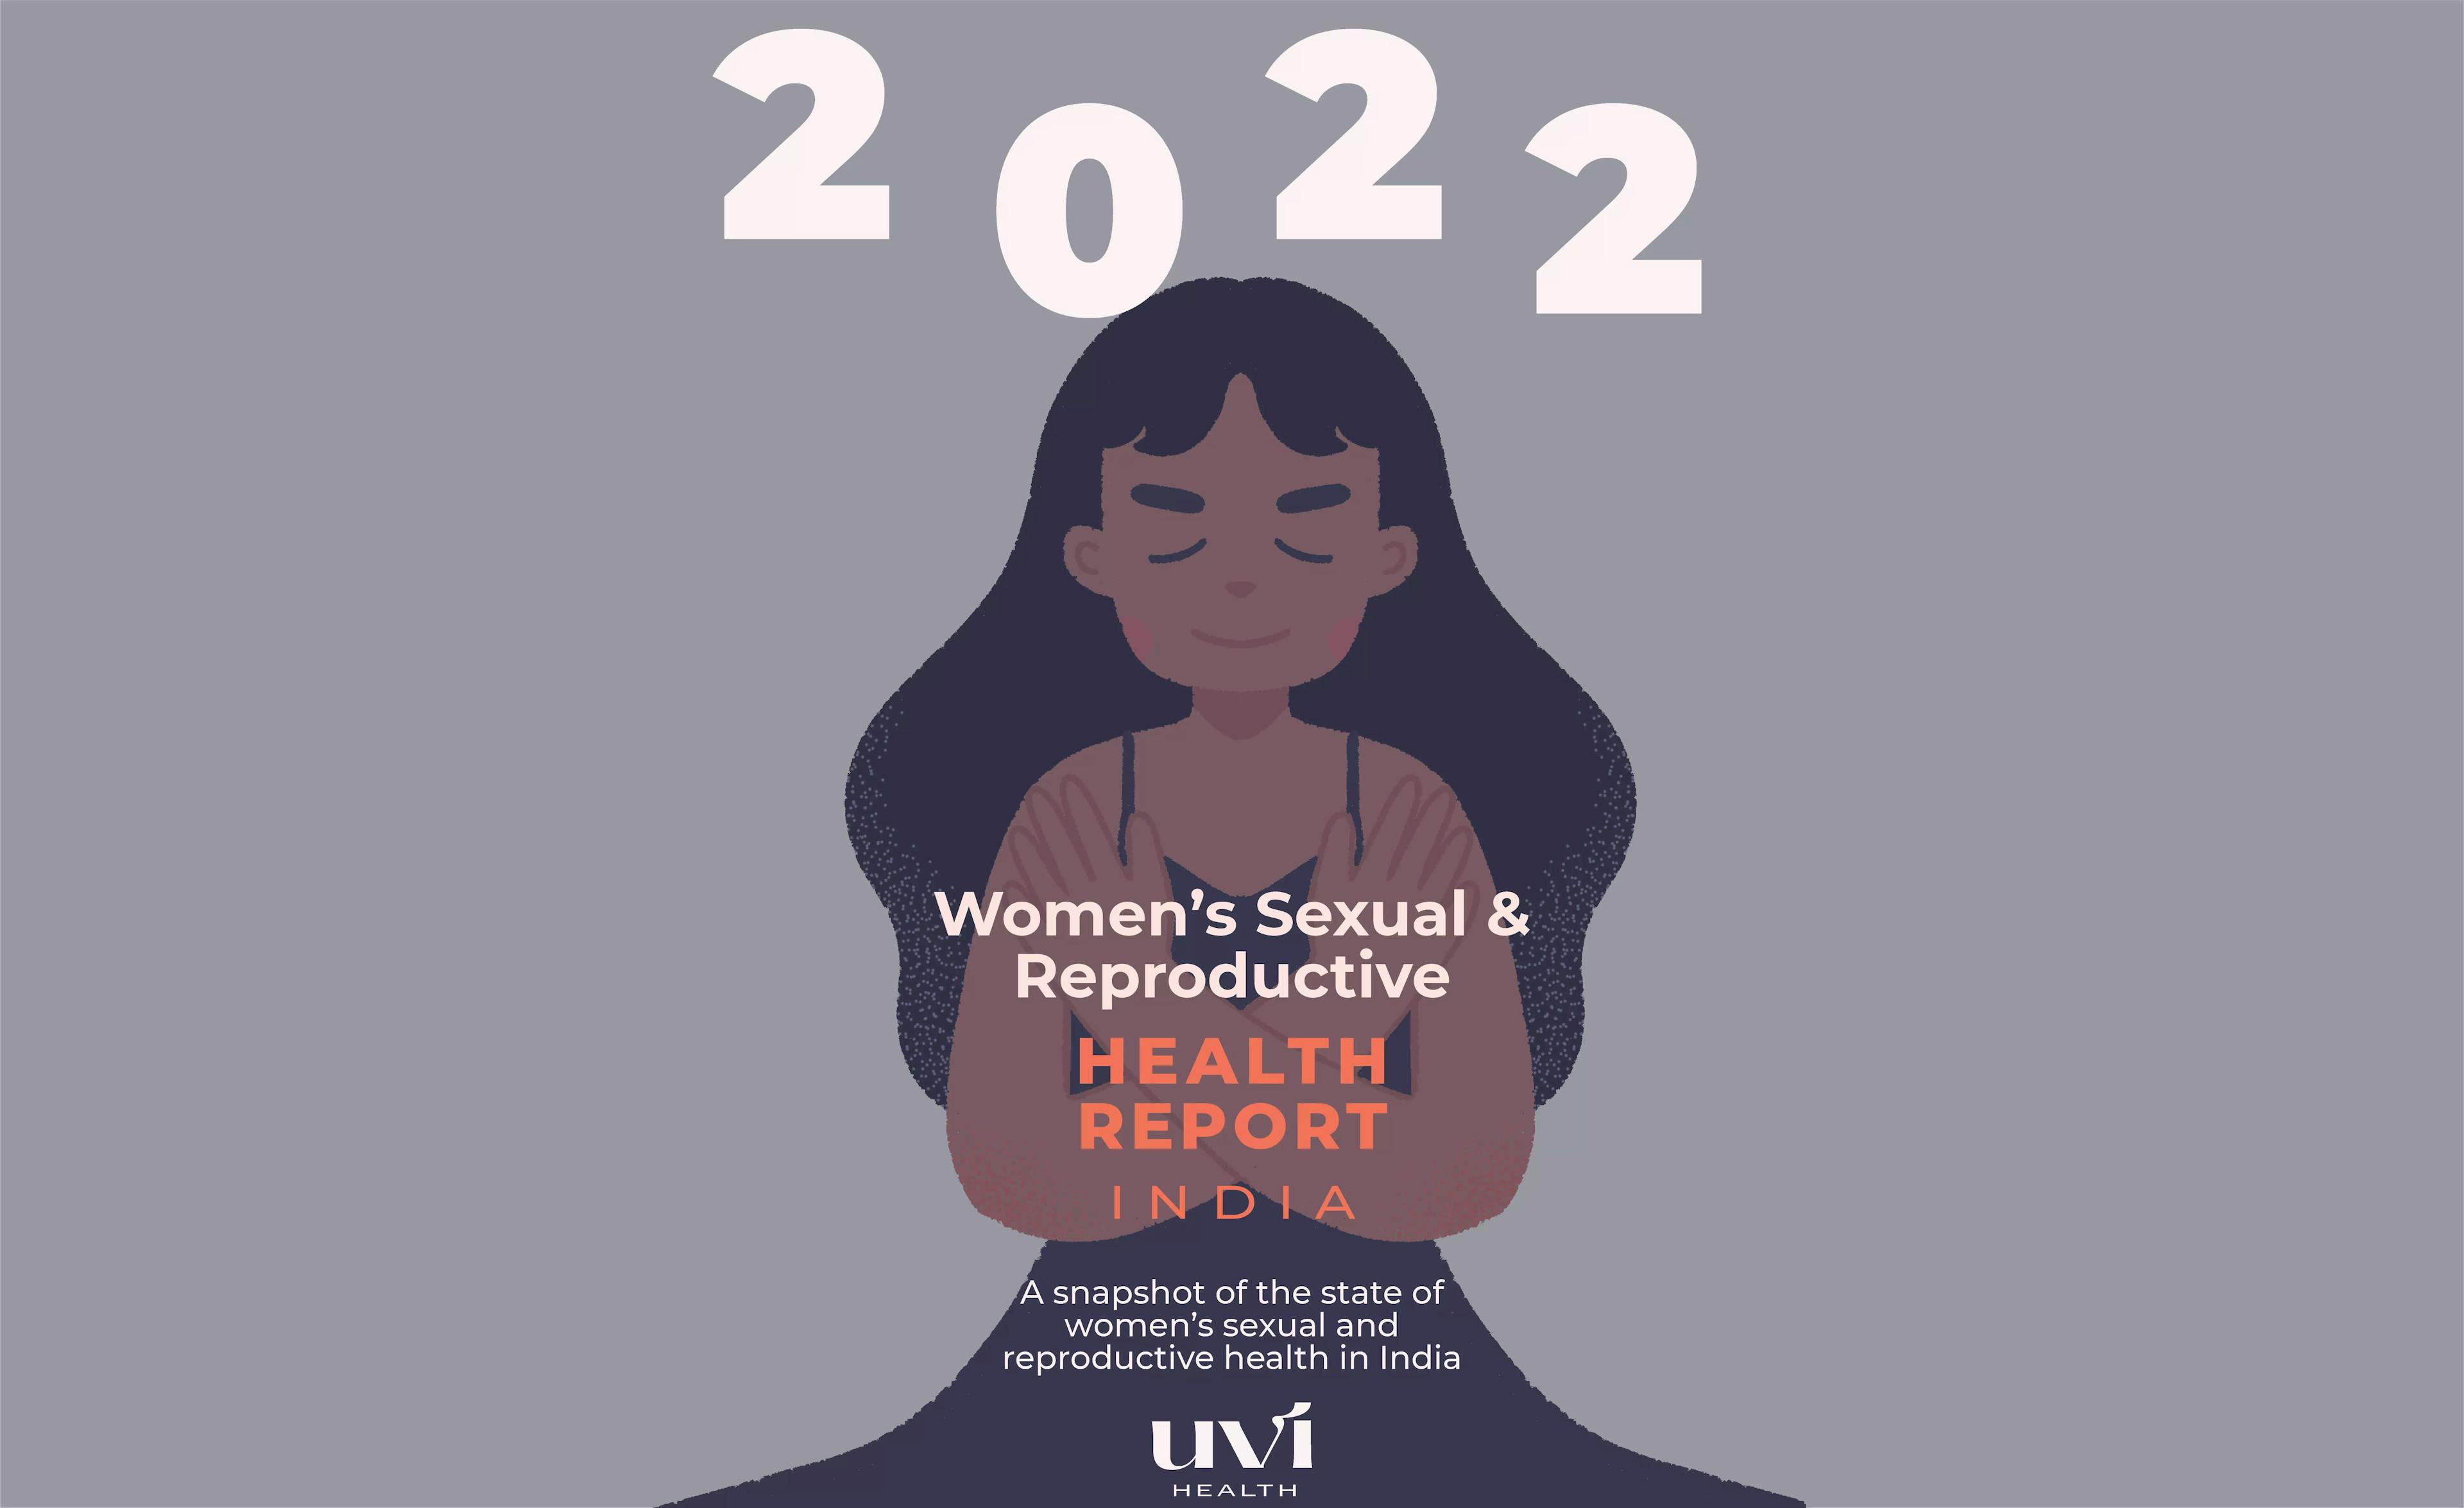 Women’s Sexual & Reproductive Health Report, India 2022